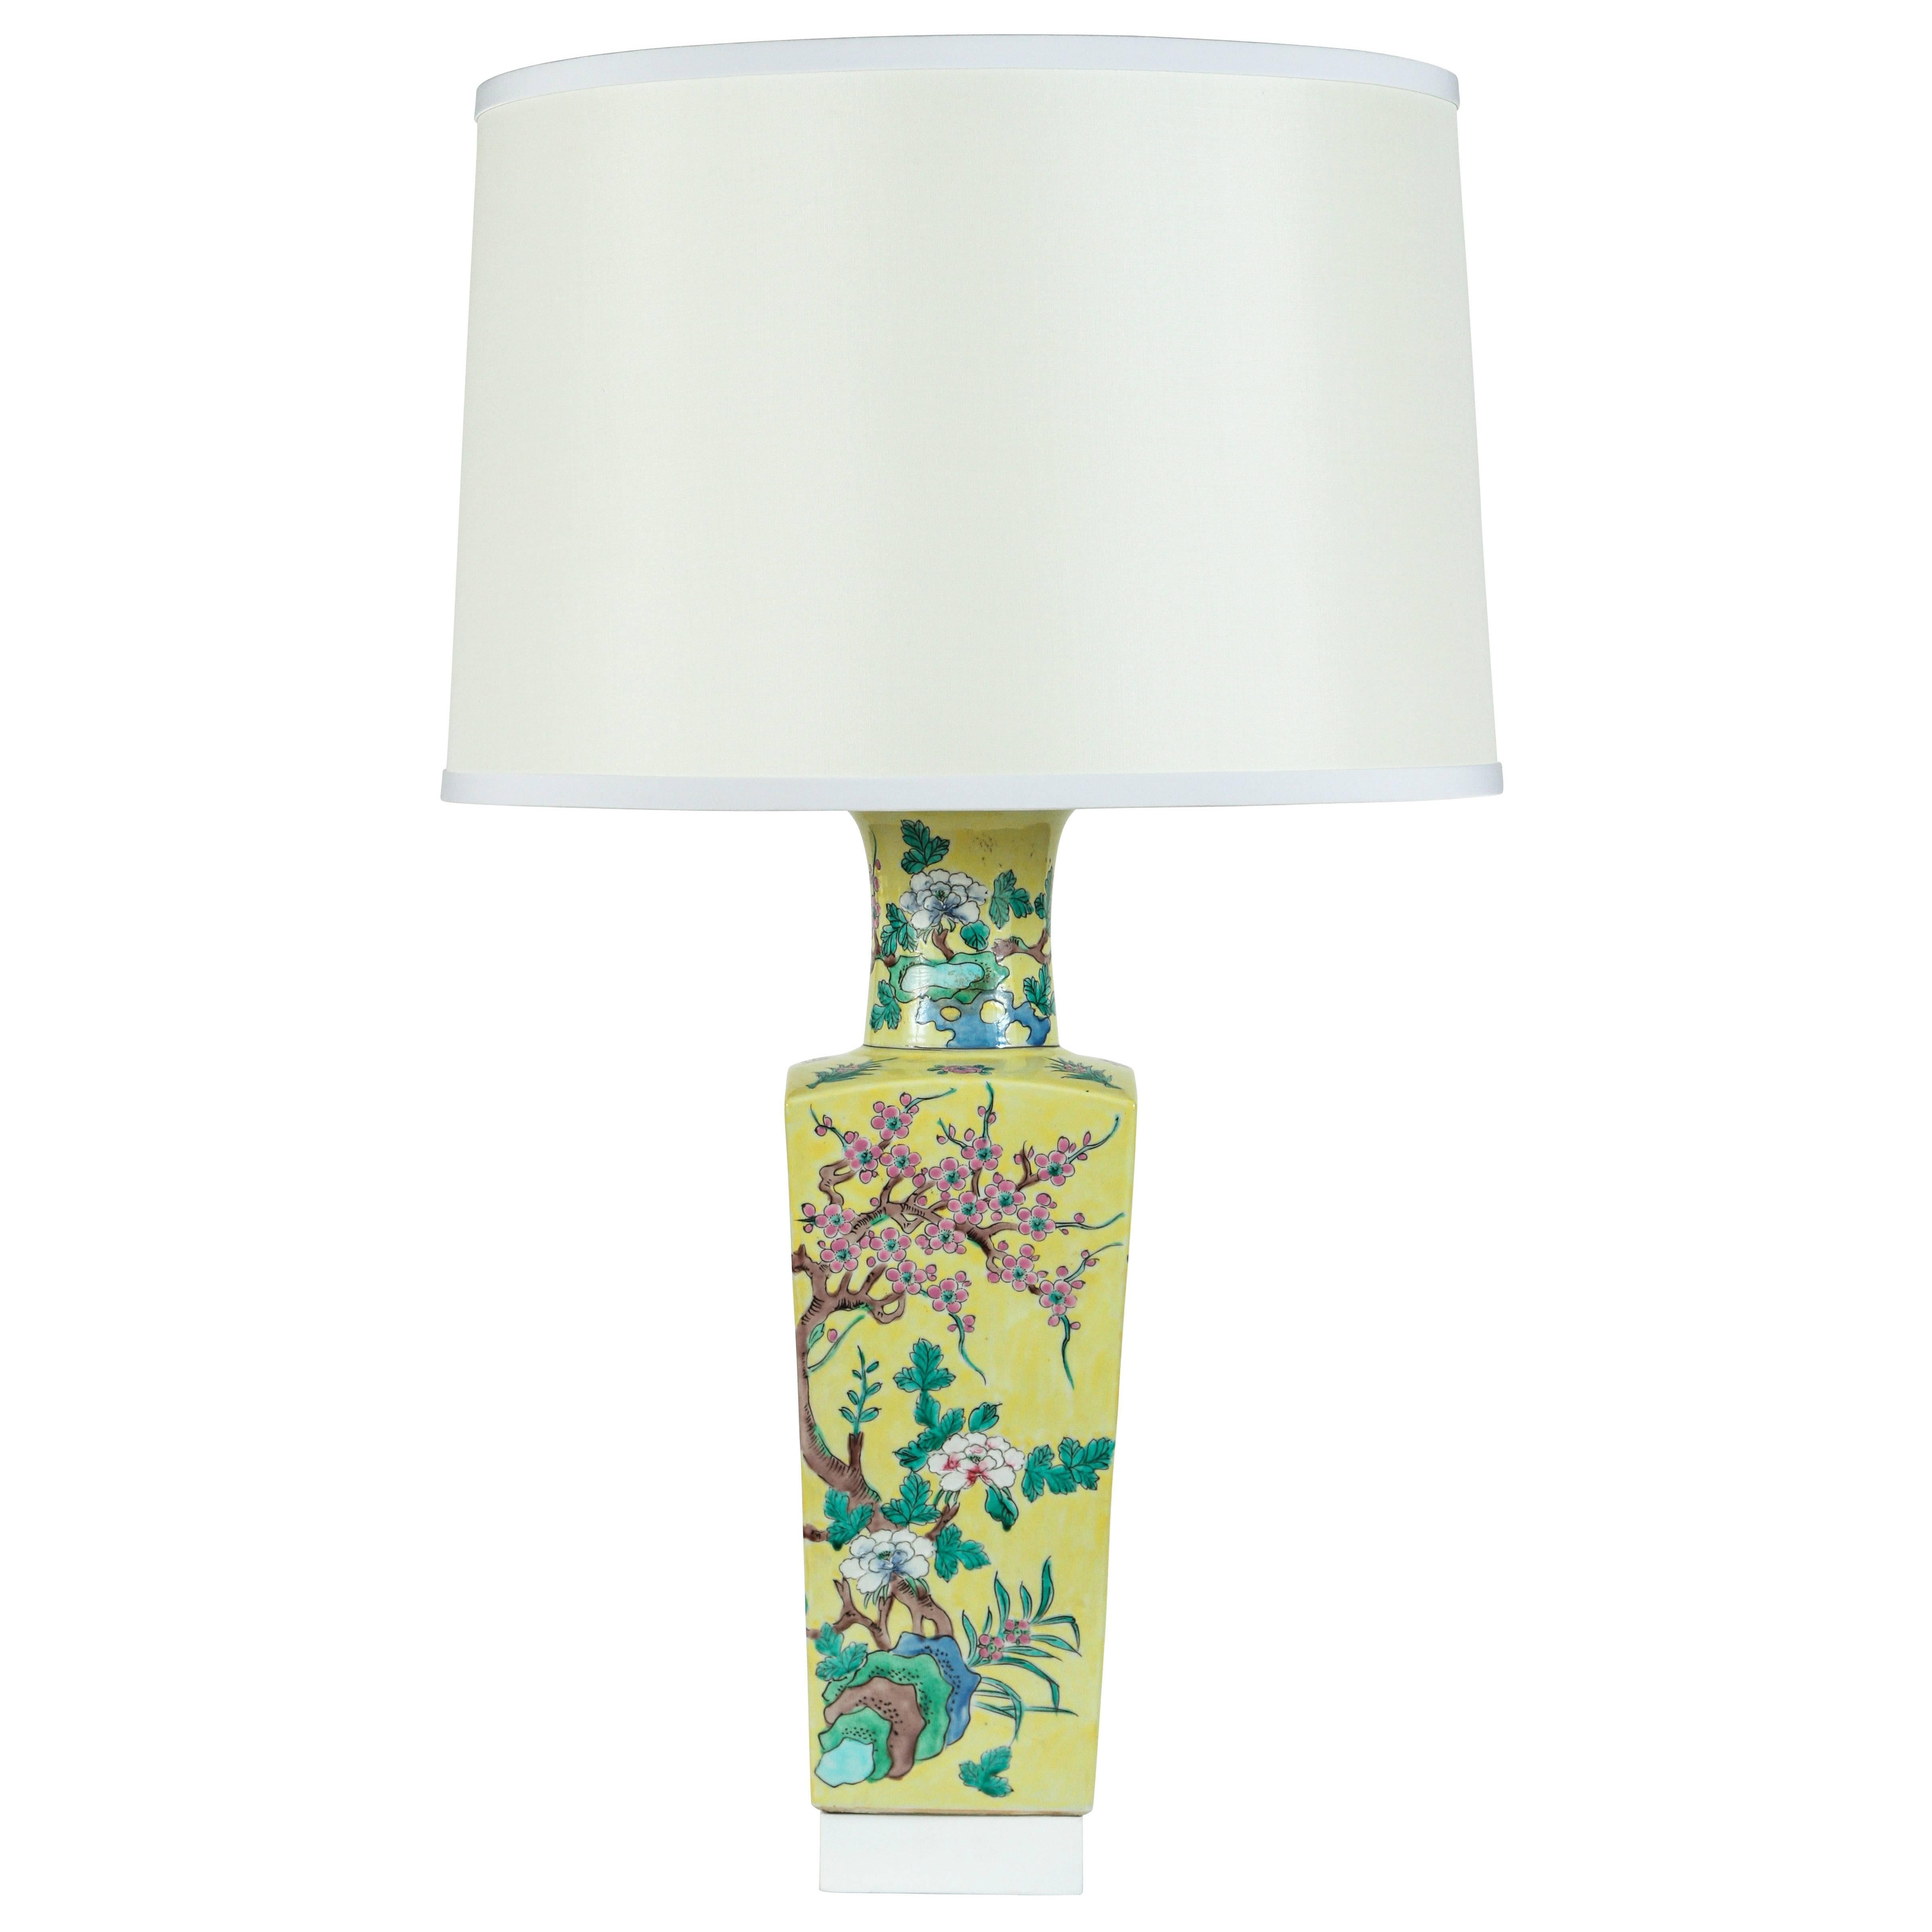 Custom Designed Chinese Yellow Urn Lamp by William Haines